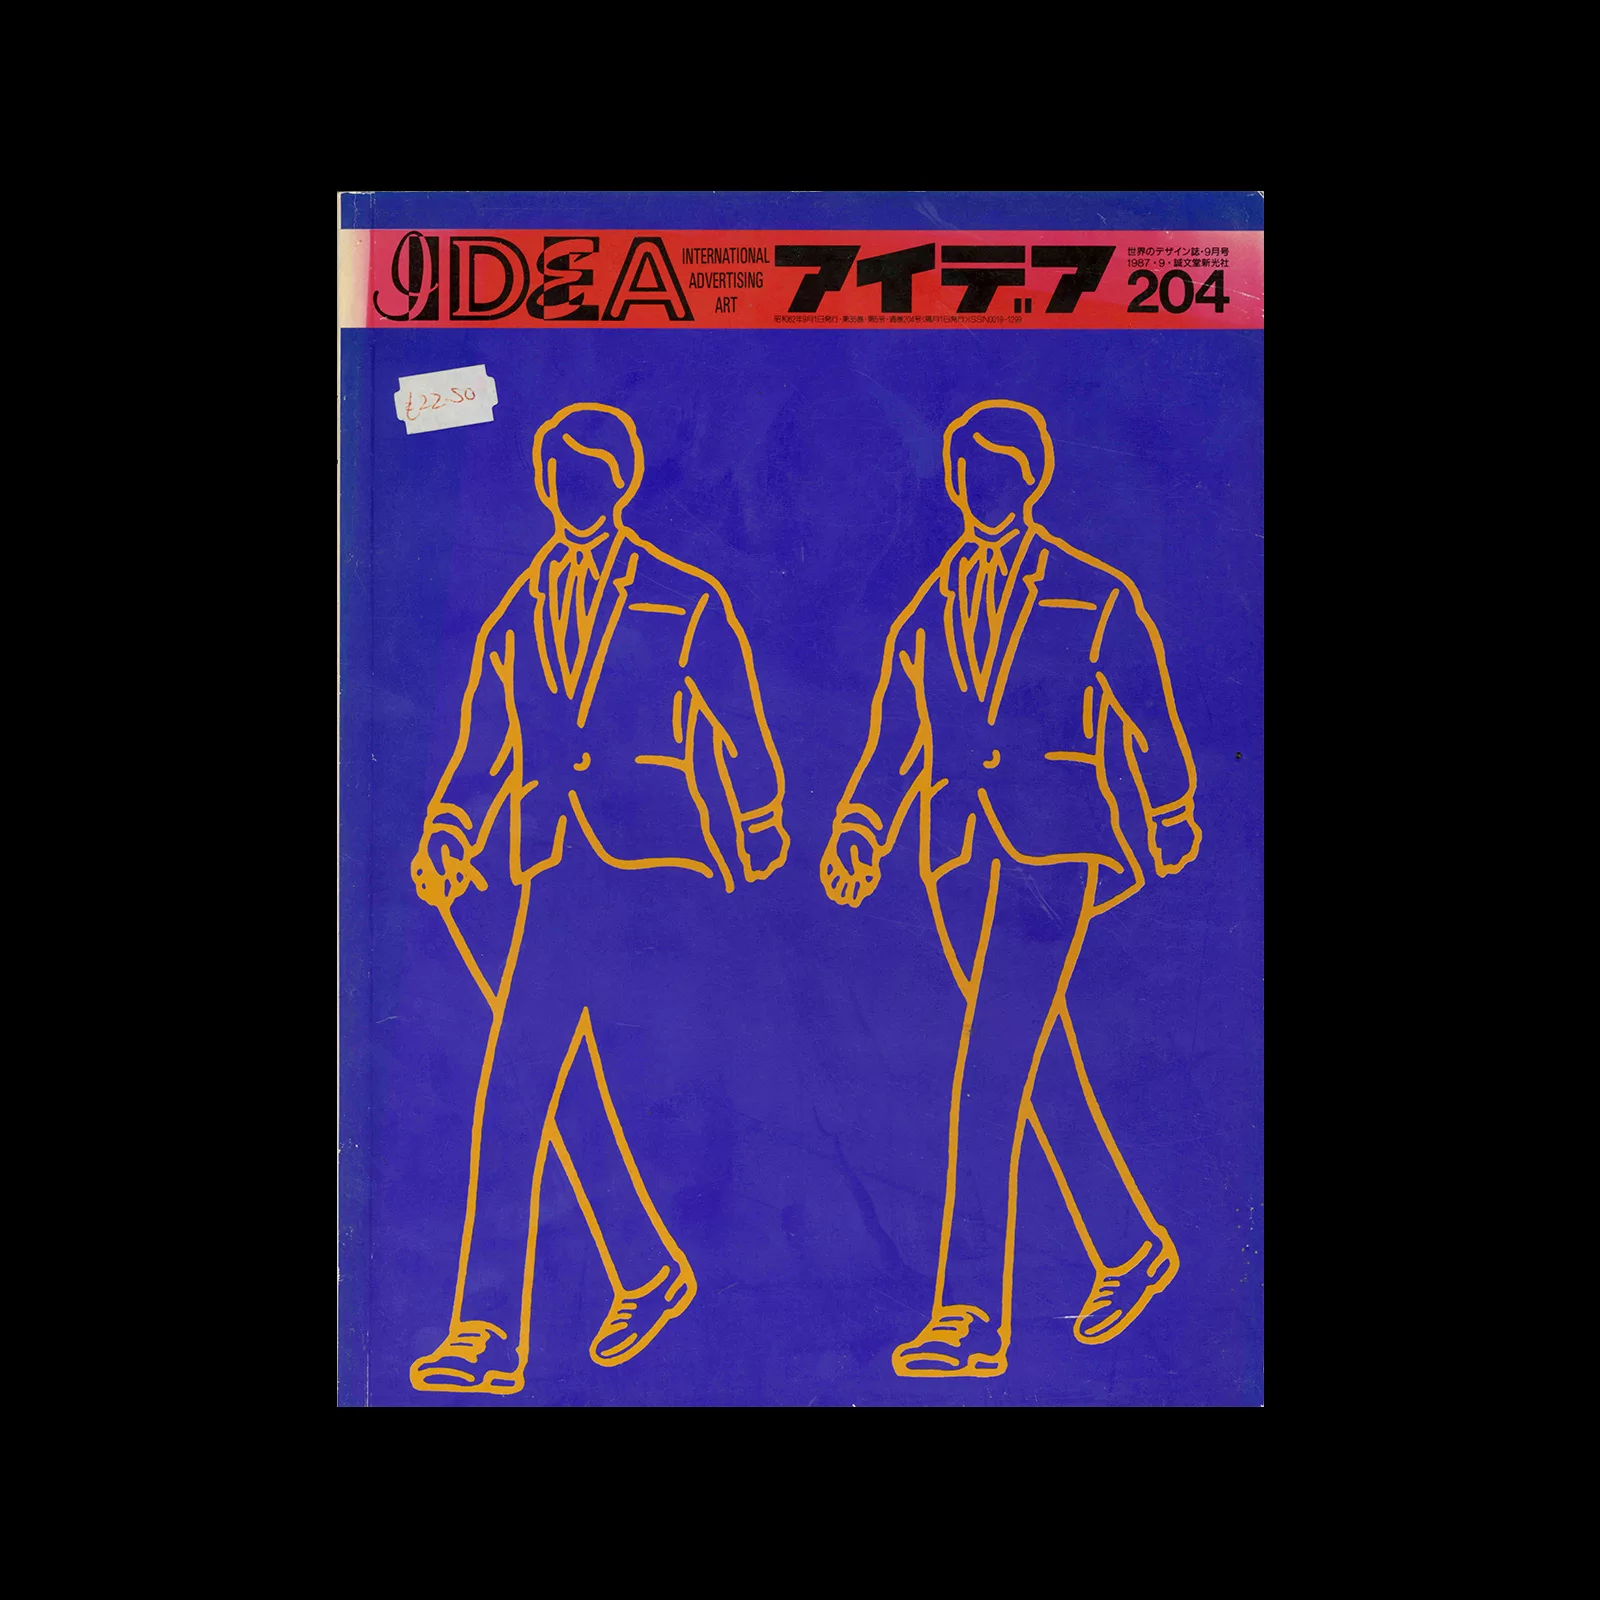 Idea 204, 1987-9. Cover design by Shigeo Fukuda